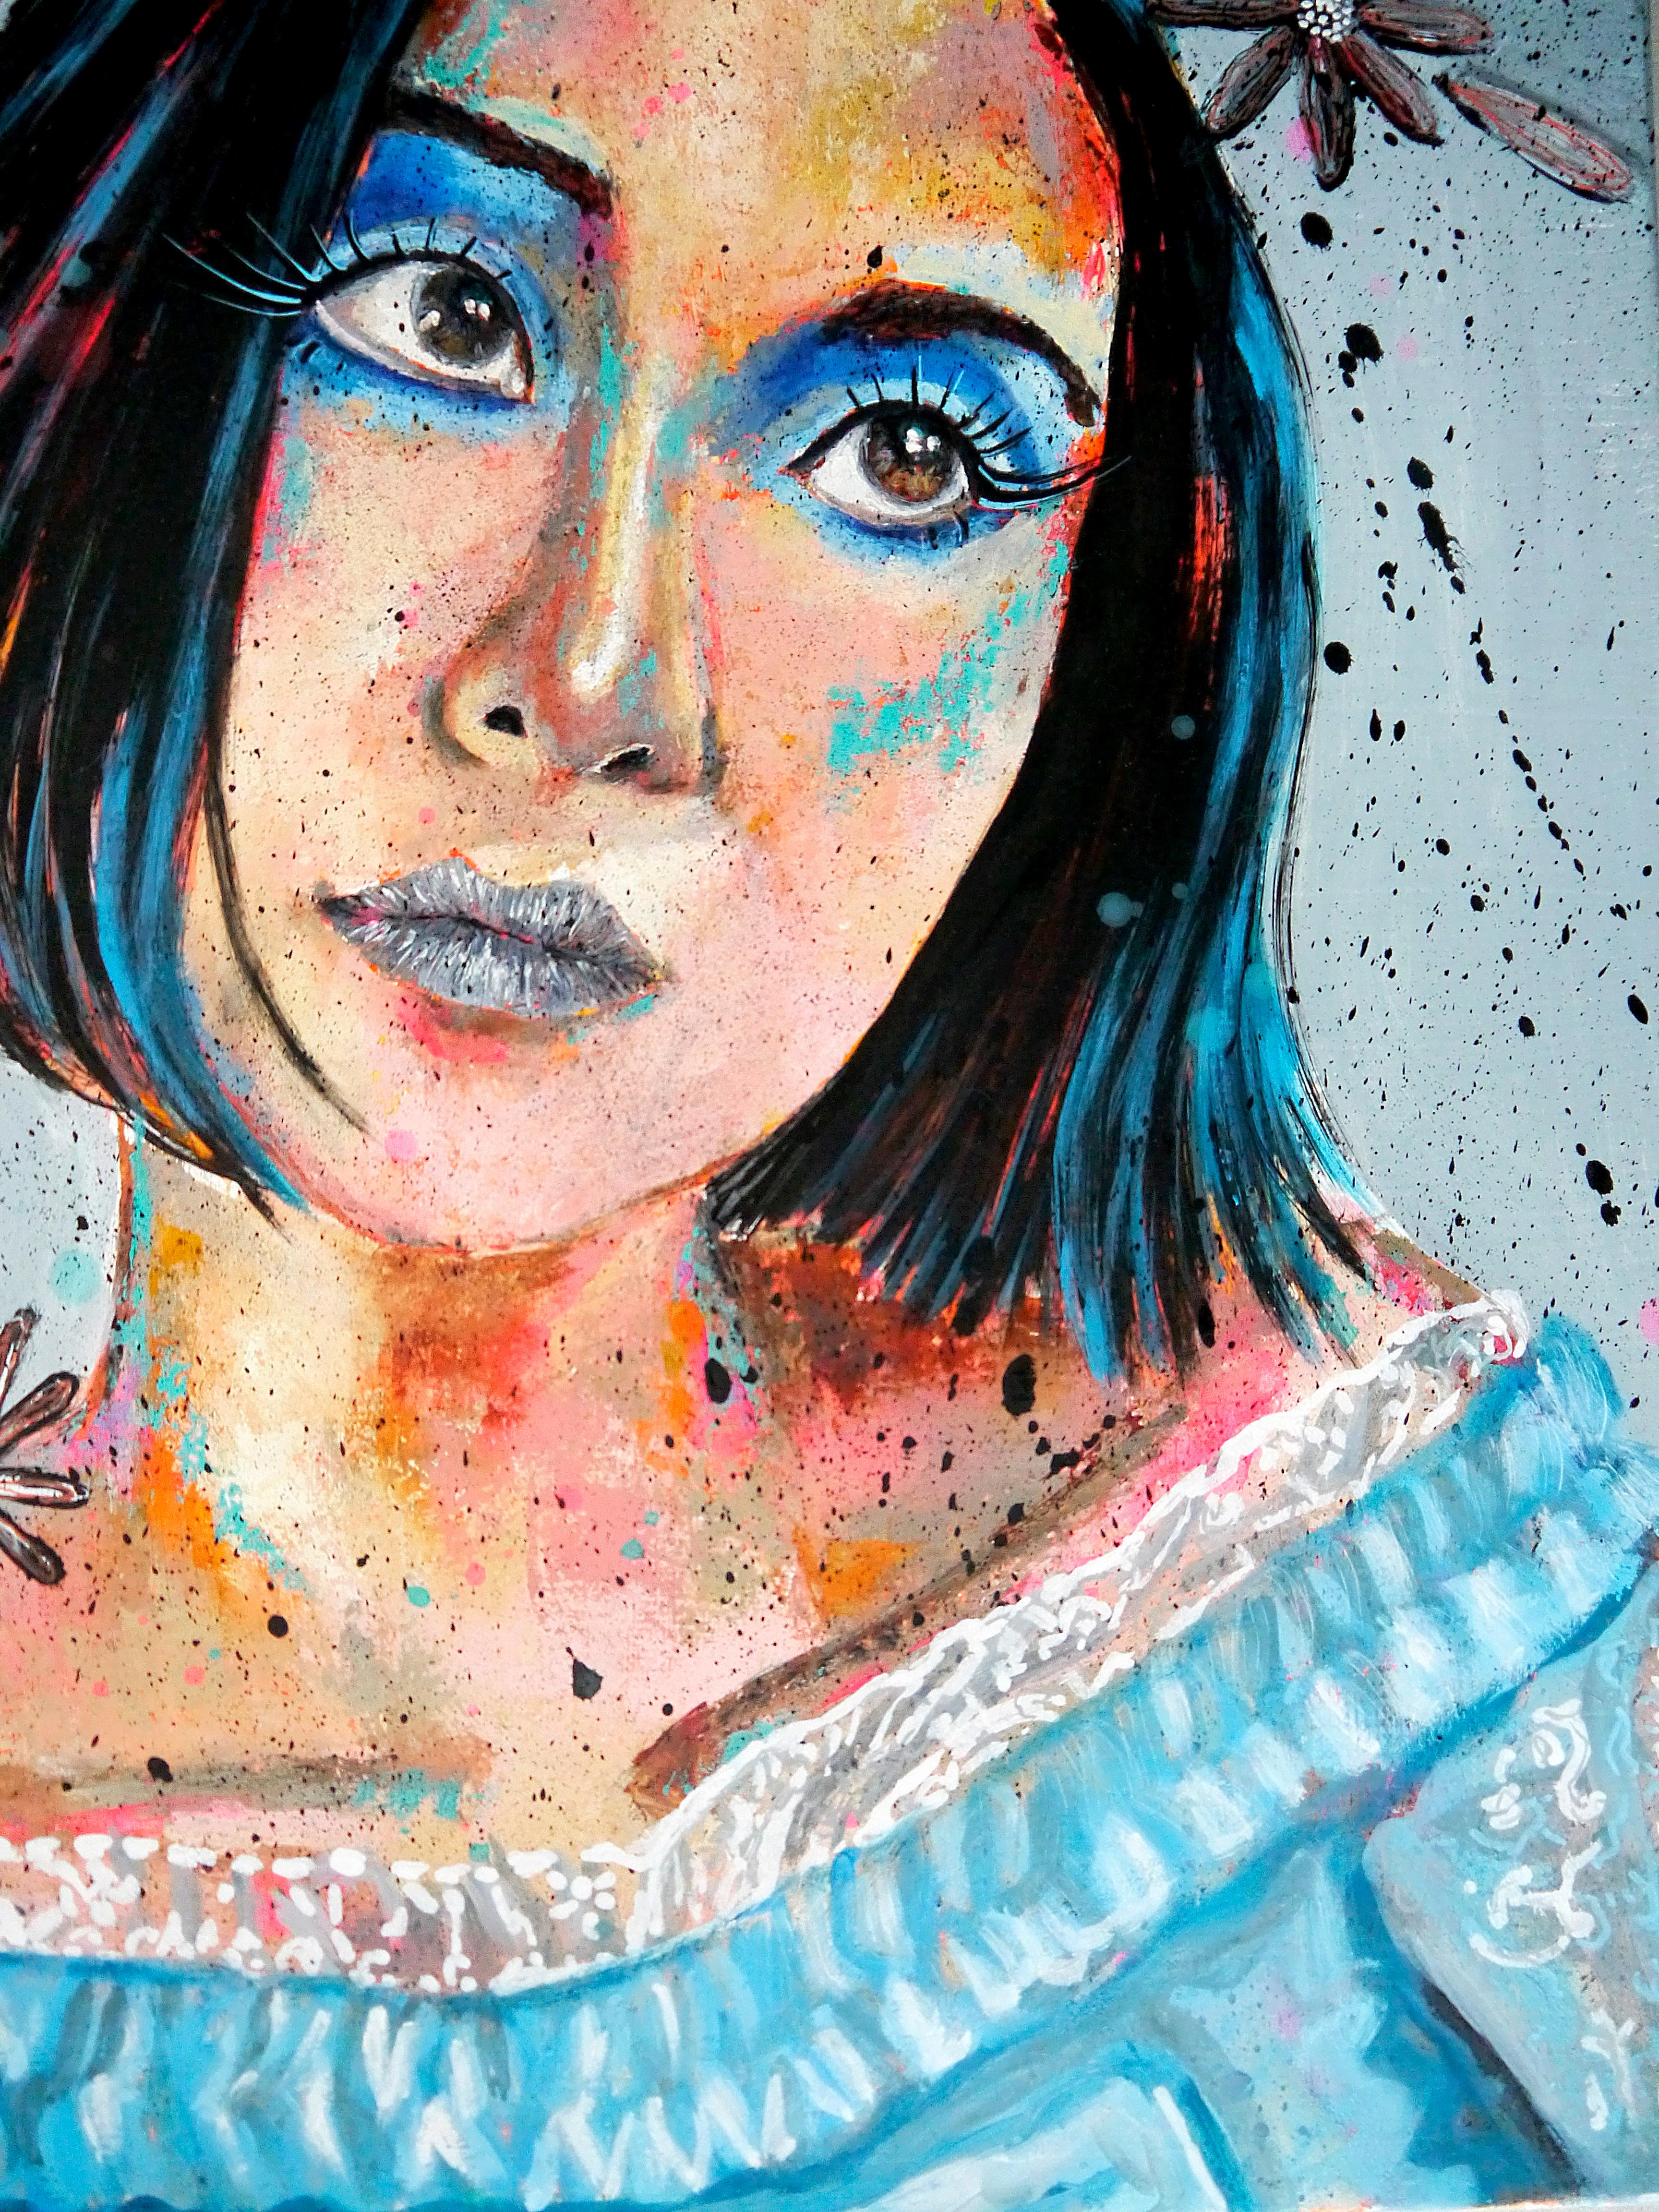 Portrait PS 127 Blue Soey

Portrait of the artist Soey Milk wearing a blue dress
Technique: oil, acrylic, and ink on canvas 61 x 46cm (24x18,1 inch)

》》R E A D Y -- T O -- H A N G《《

❶ → Original signed work. Certificate of authenticity included.

❷